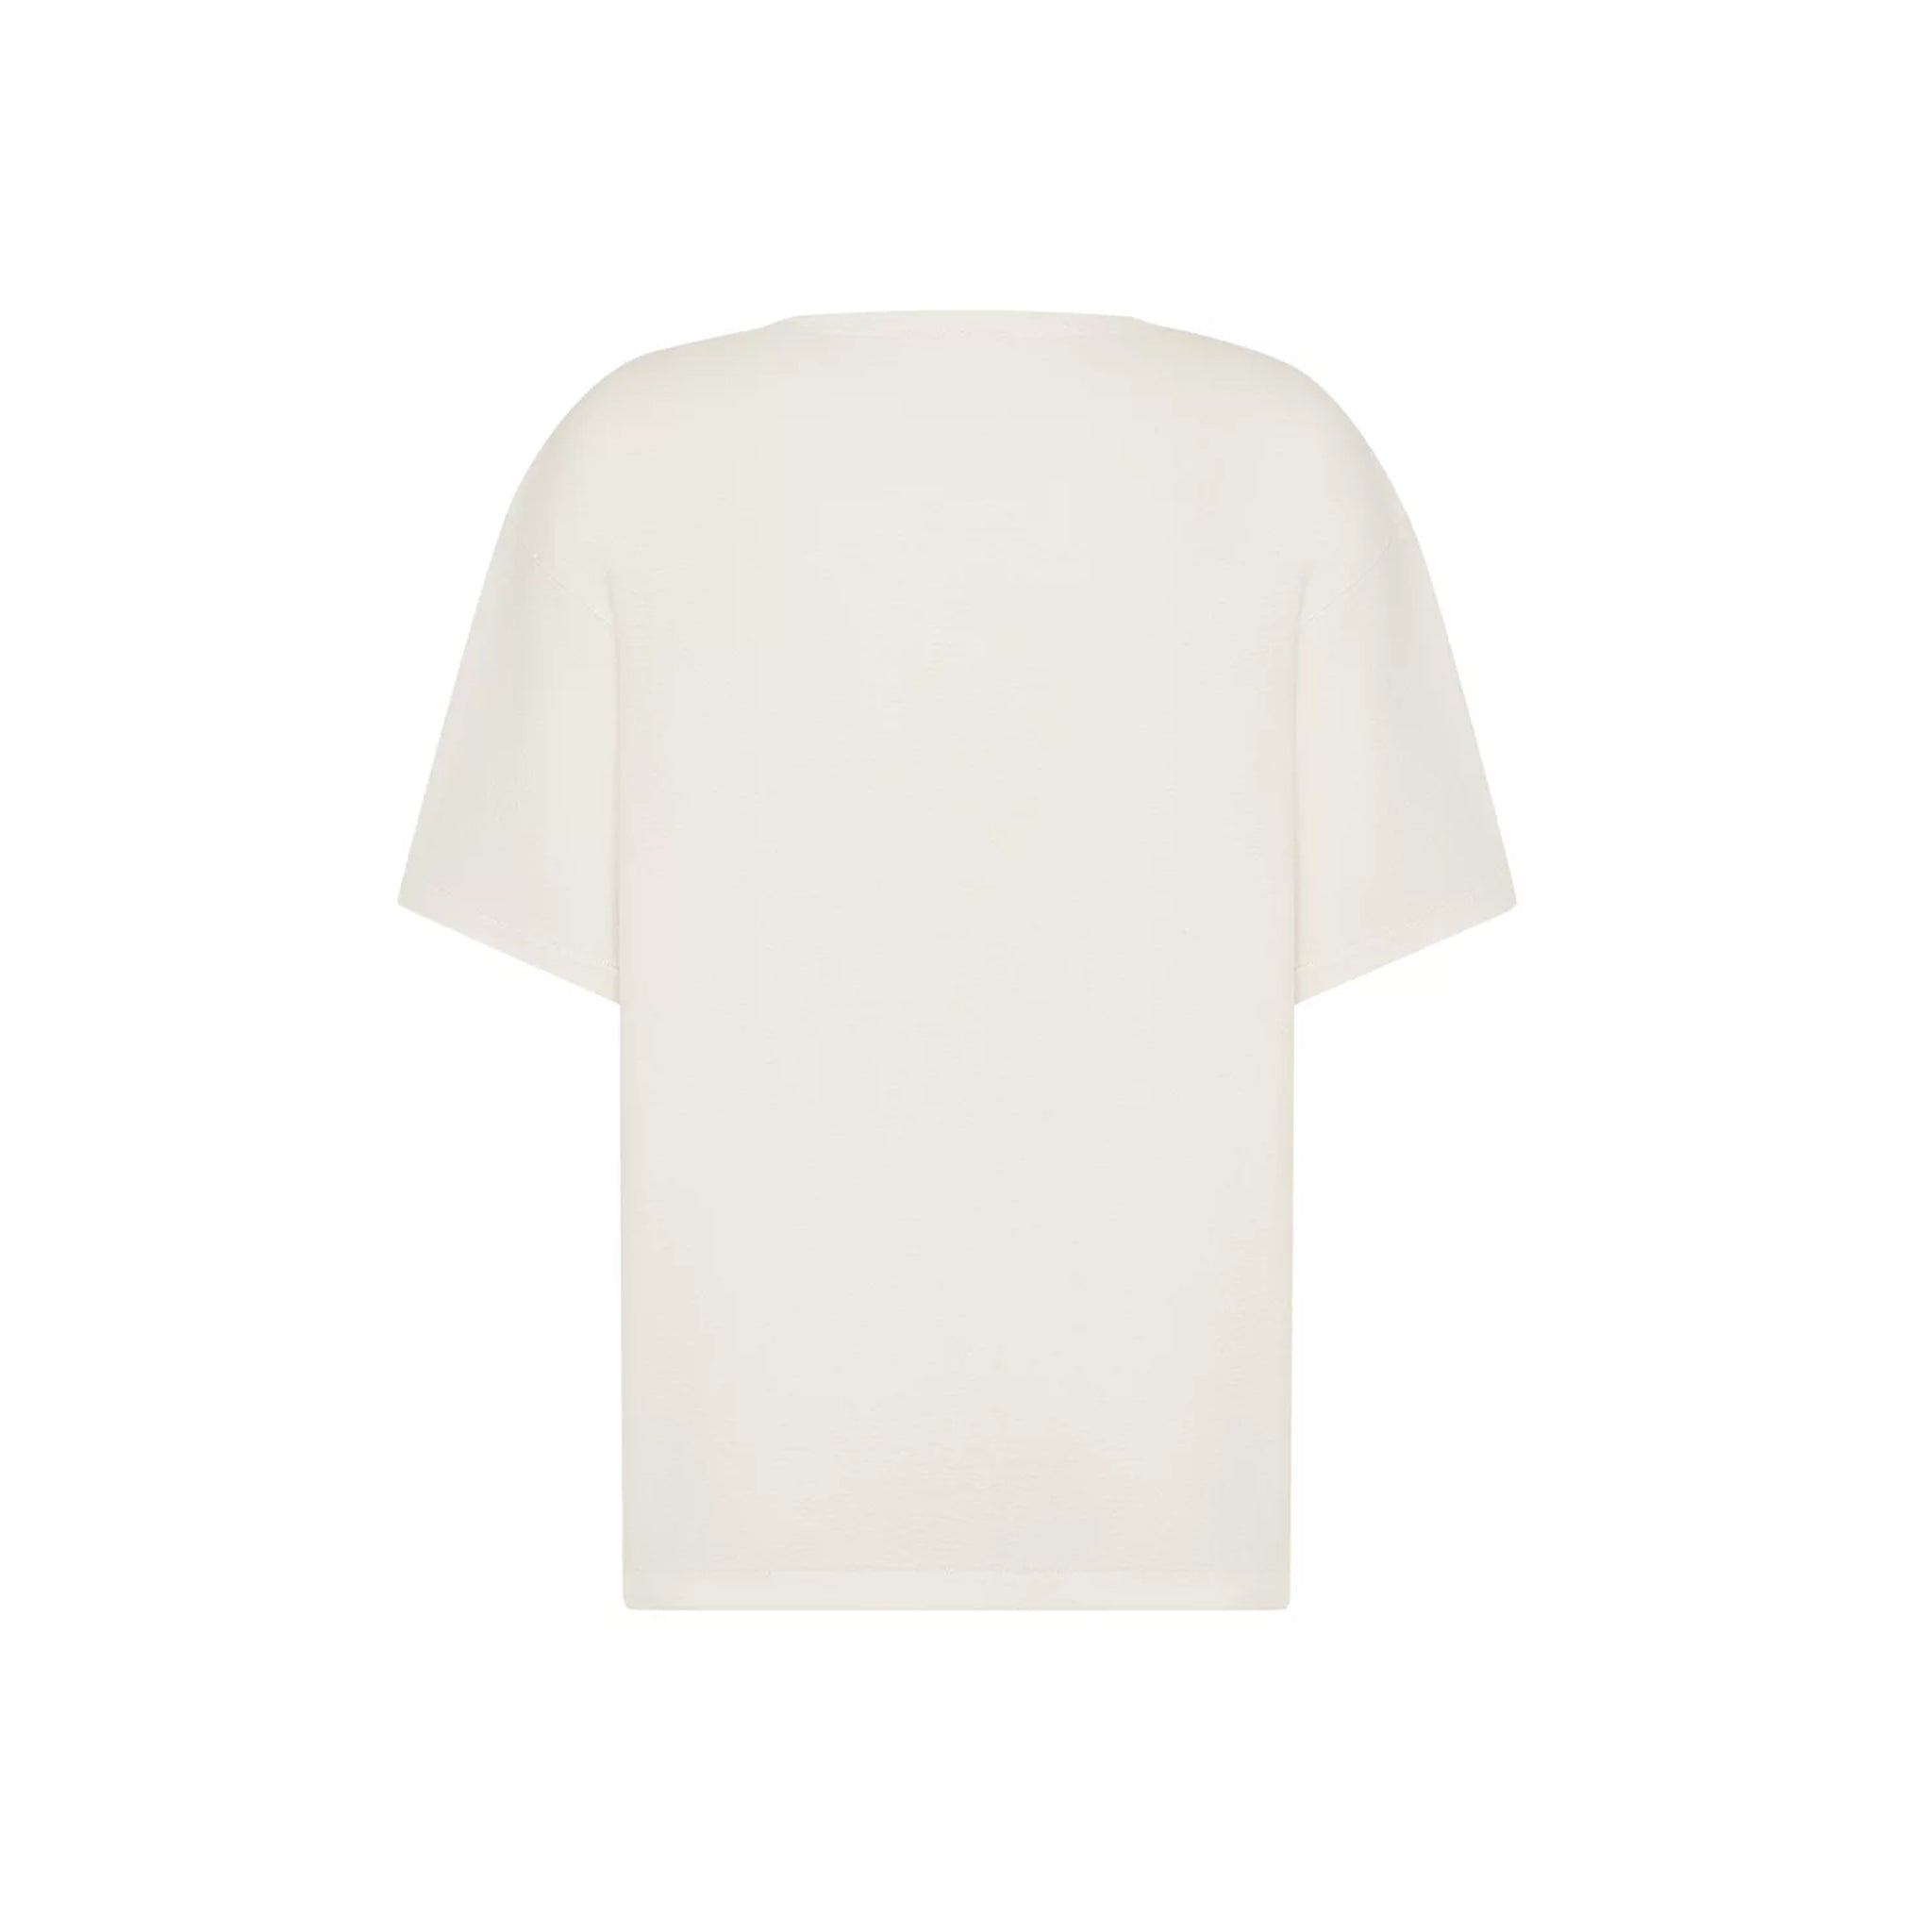 DIOR and SACAI Tee Shirt white L  eBay